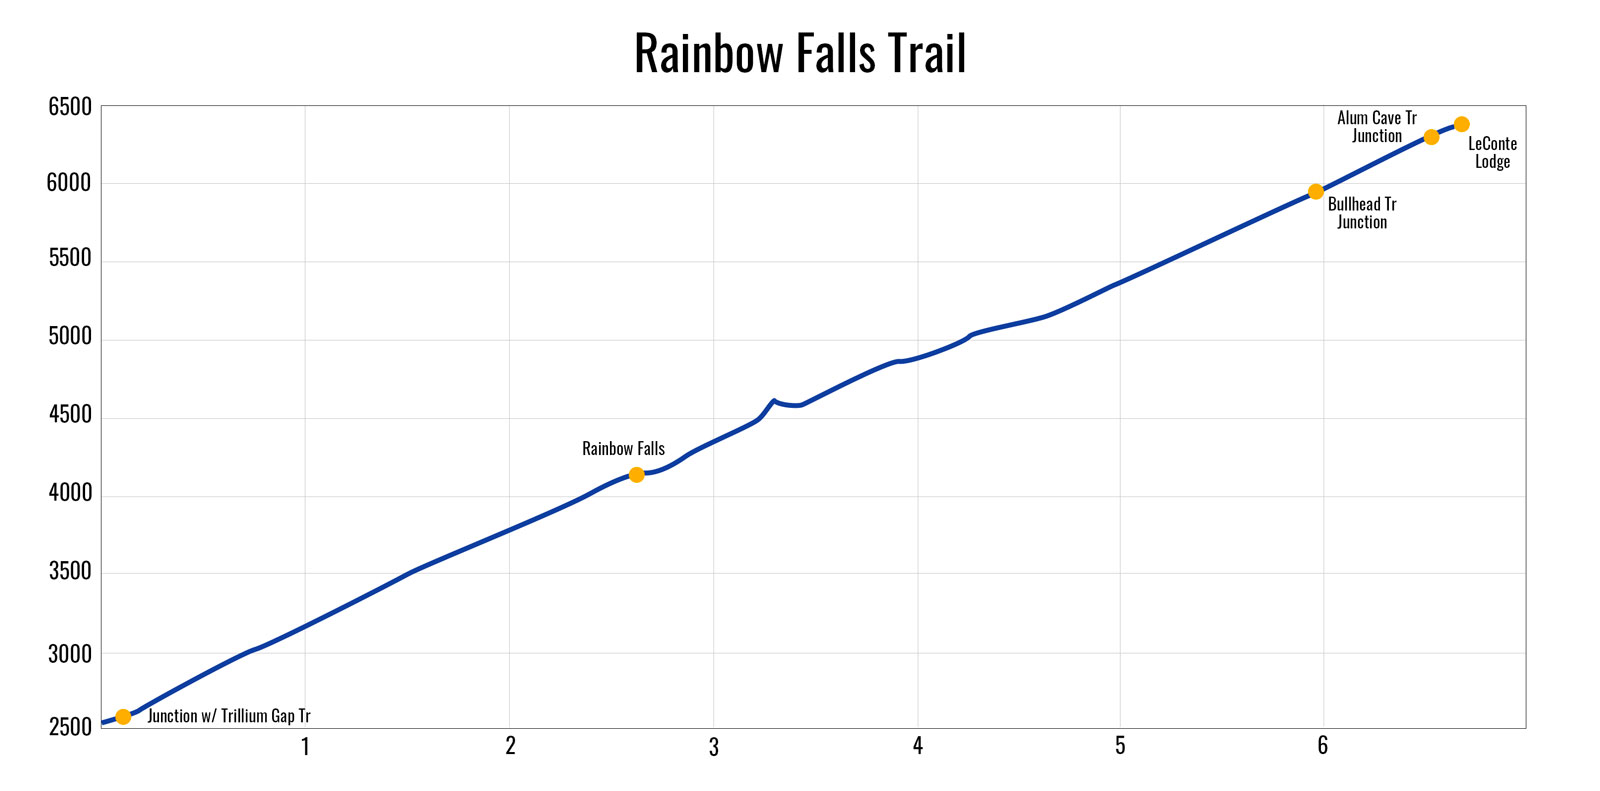 Rainbow Falls Trail (Mt. LeConte) Elevation Profile